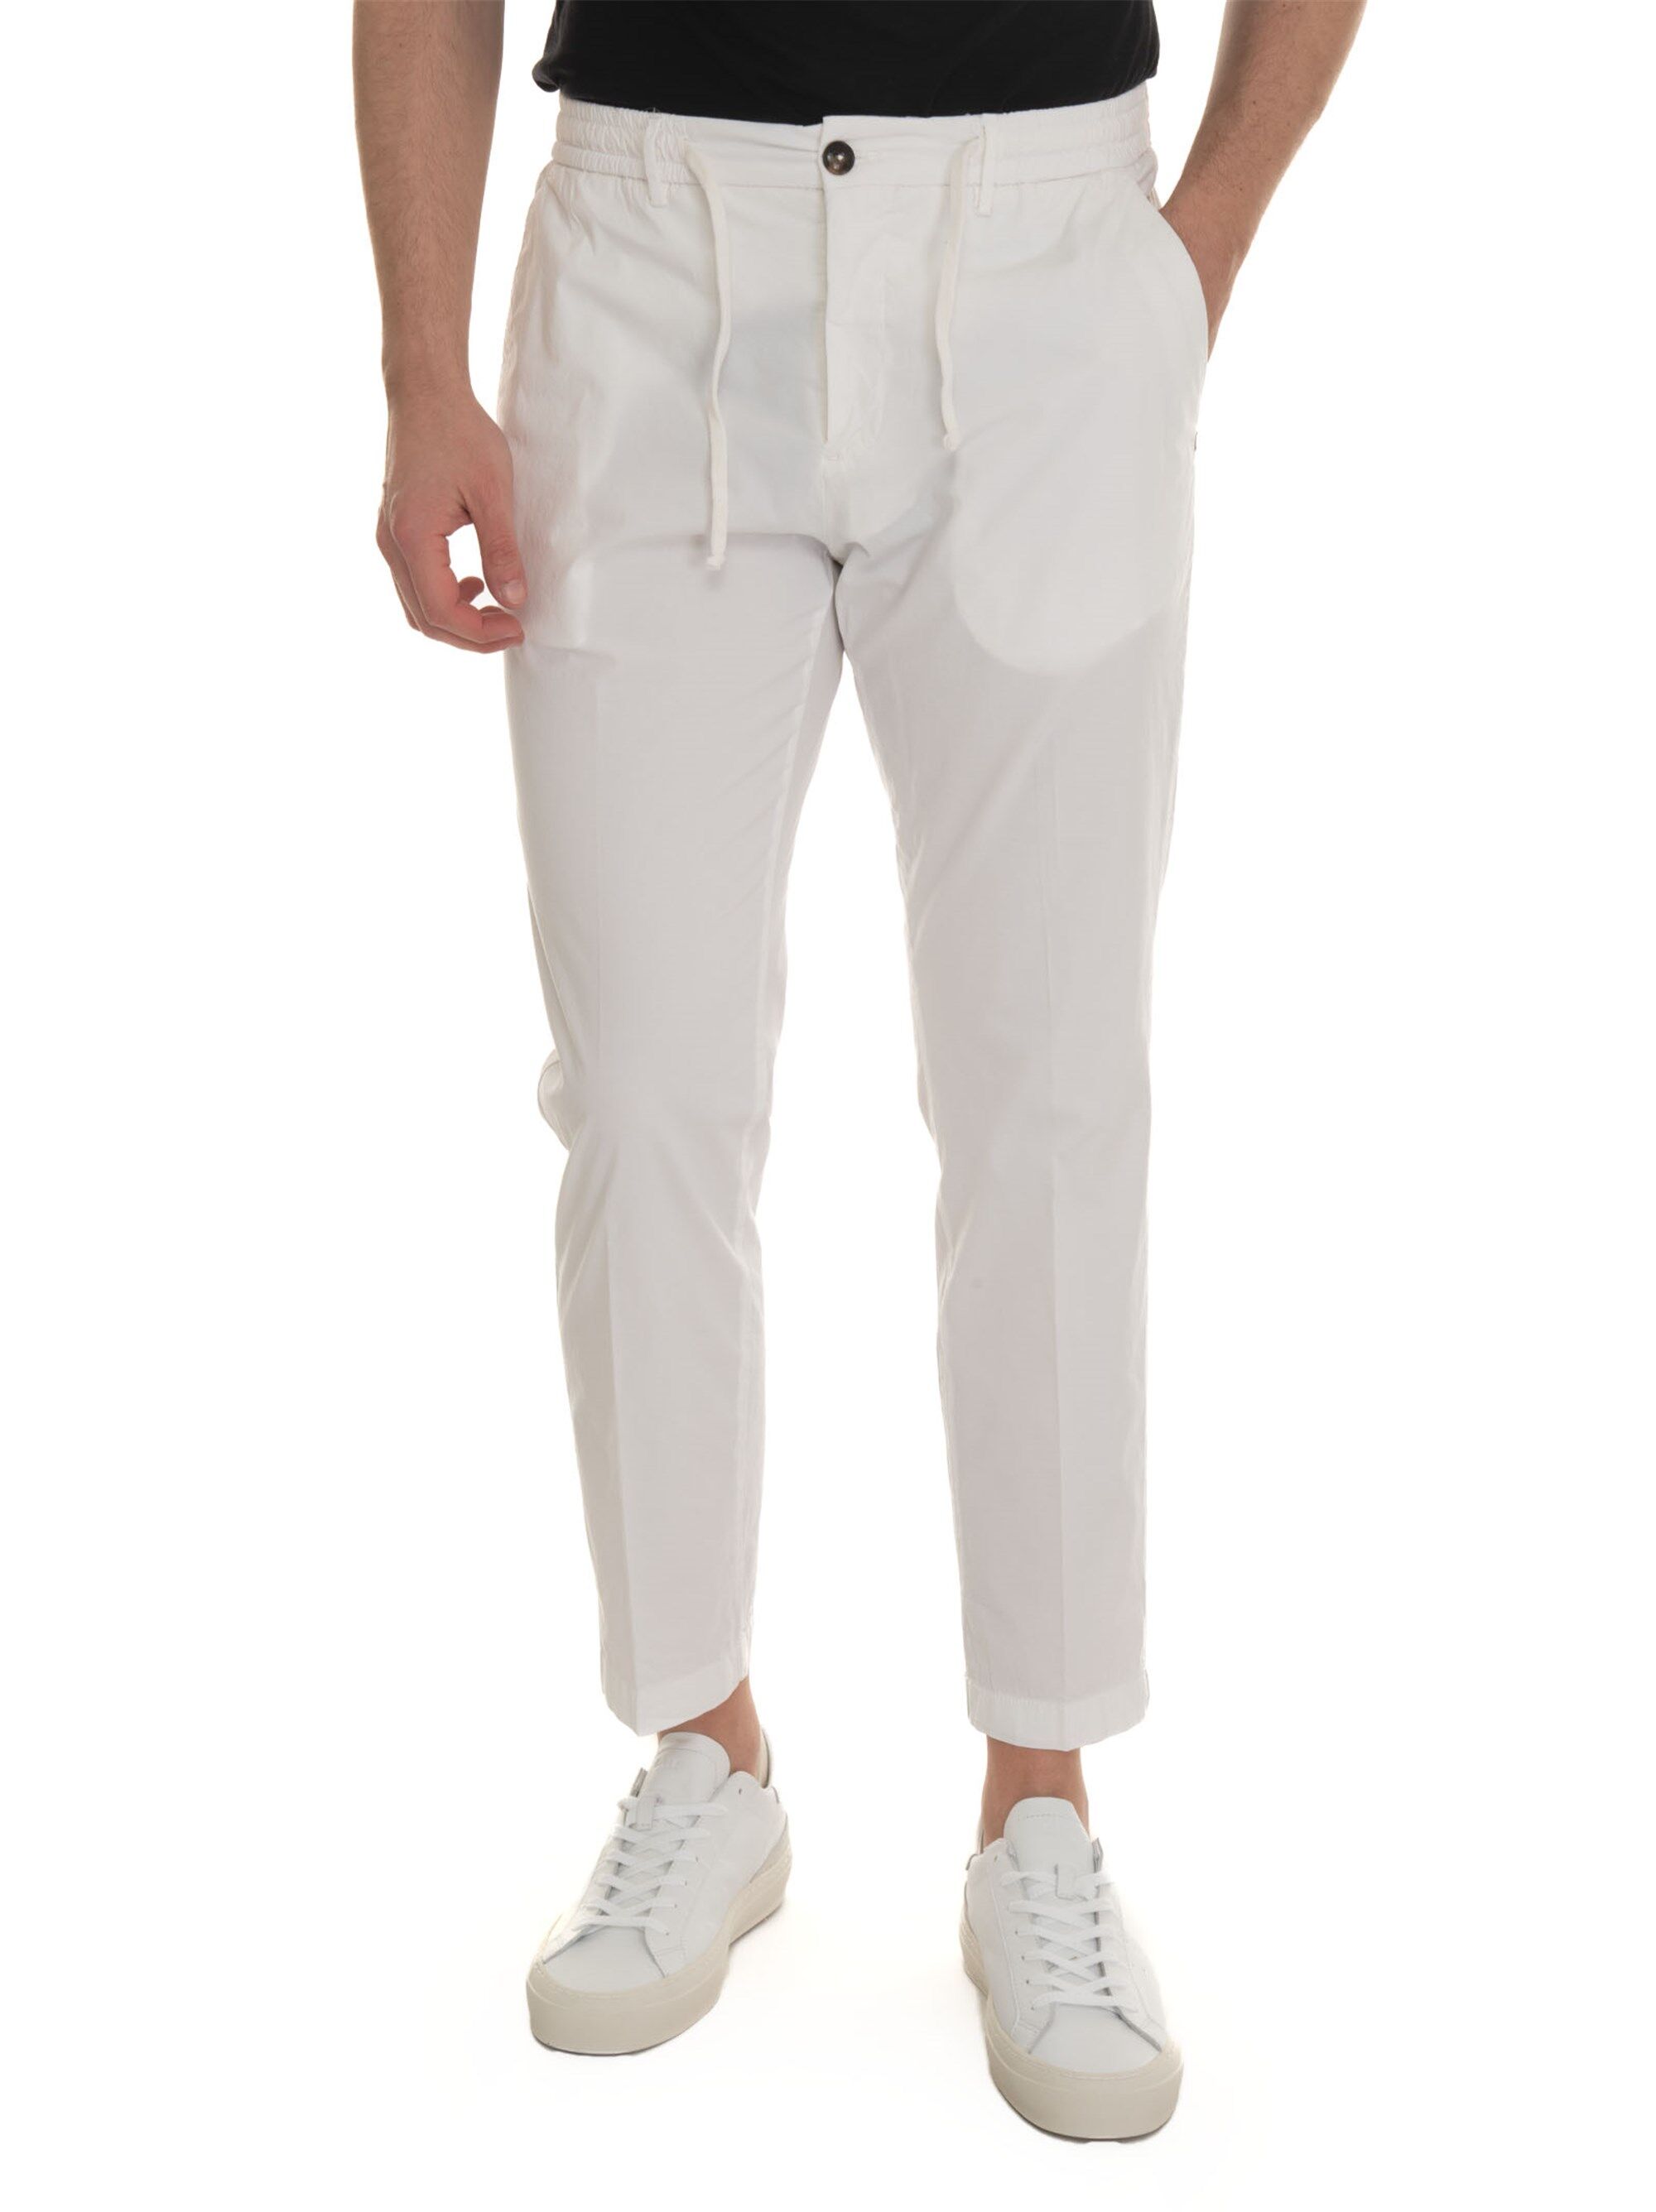 Detwelve Pantalone modello chino Bianco Uomo 54